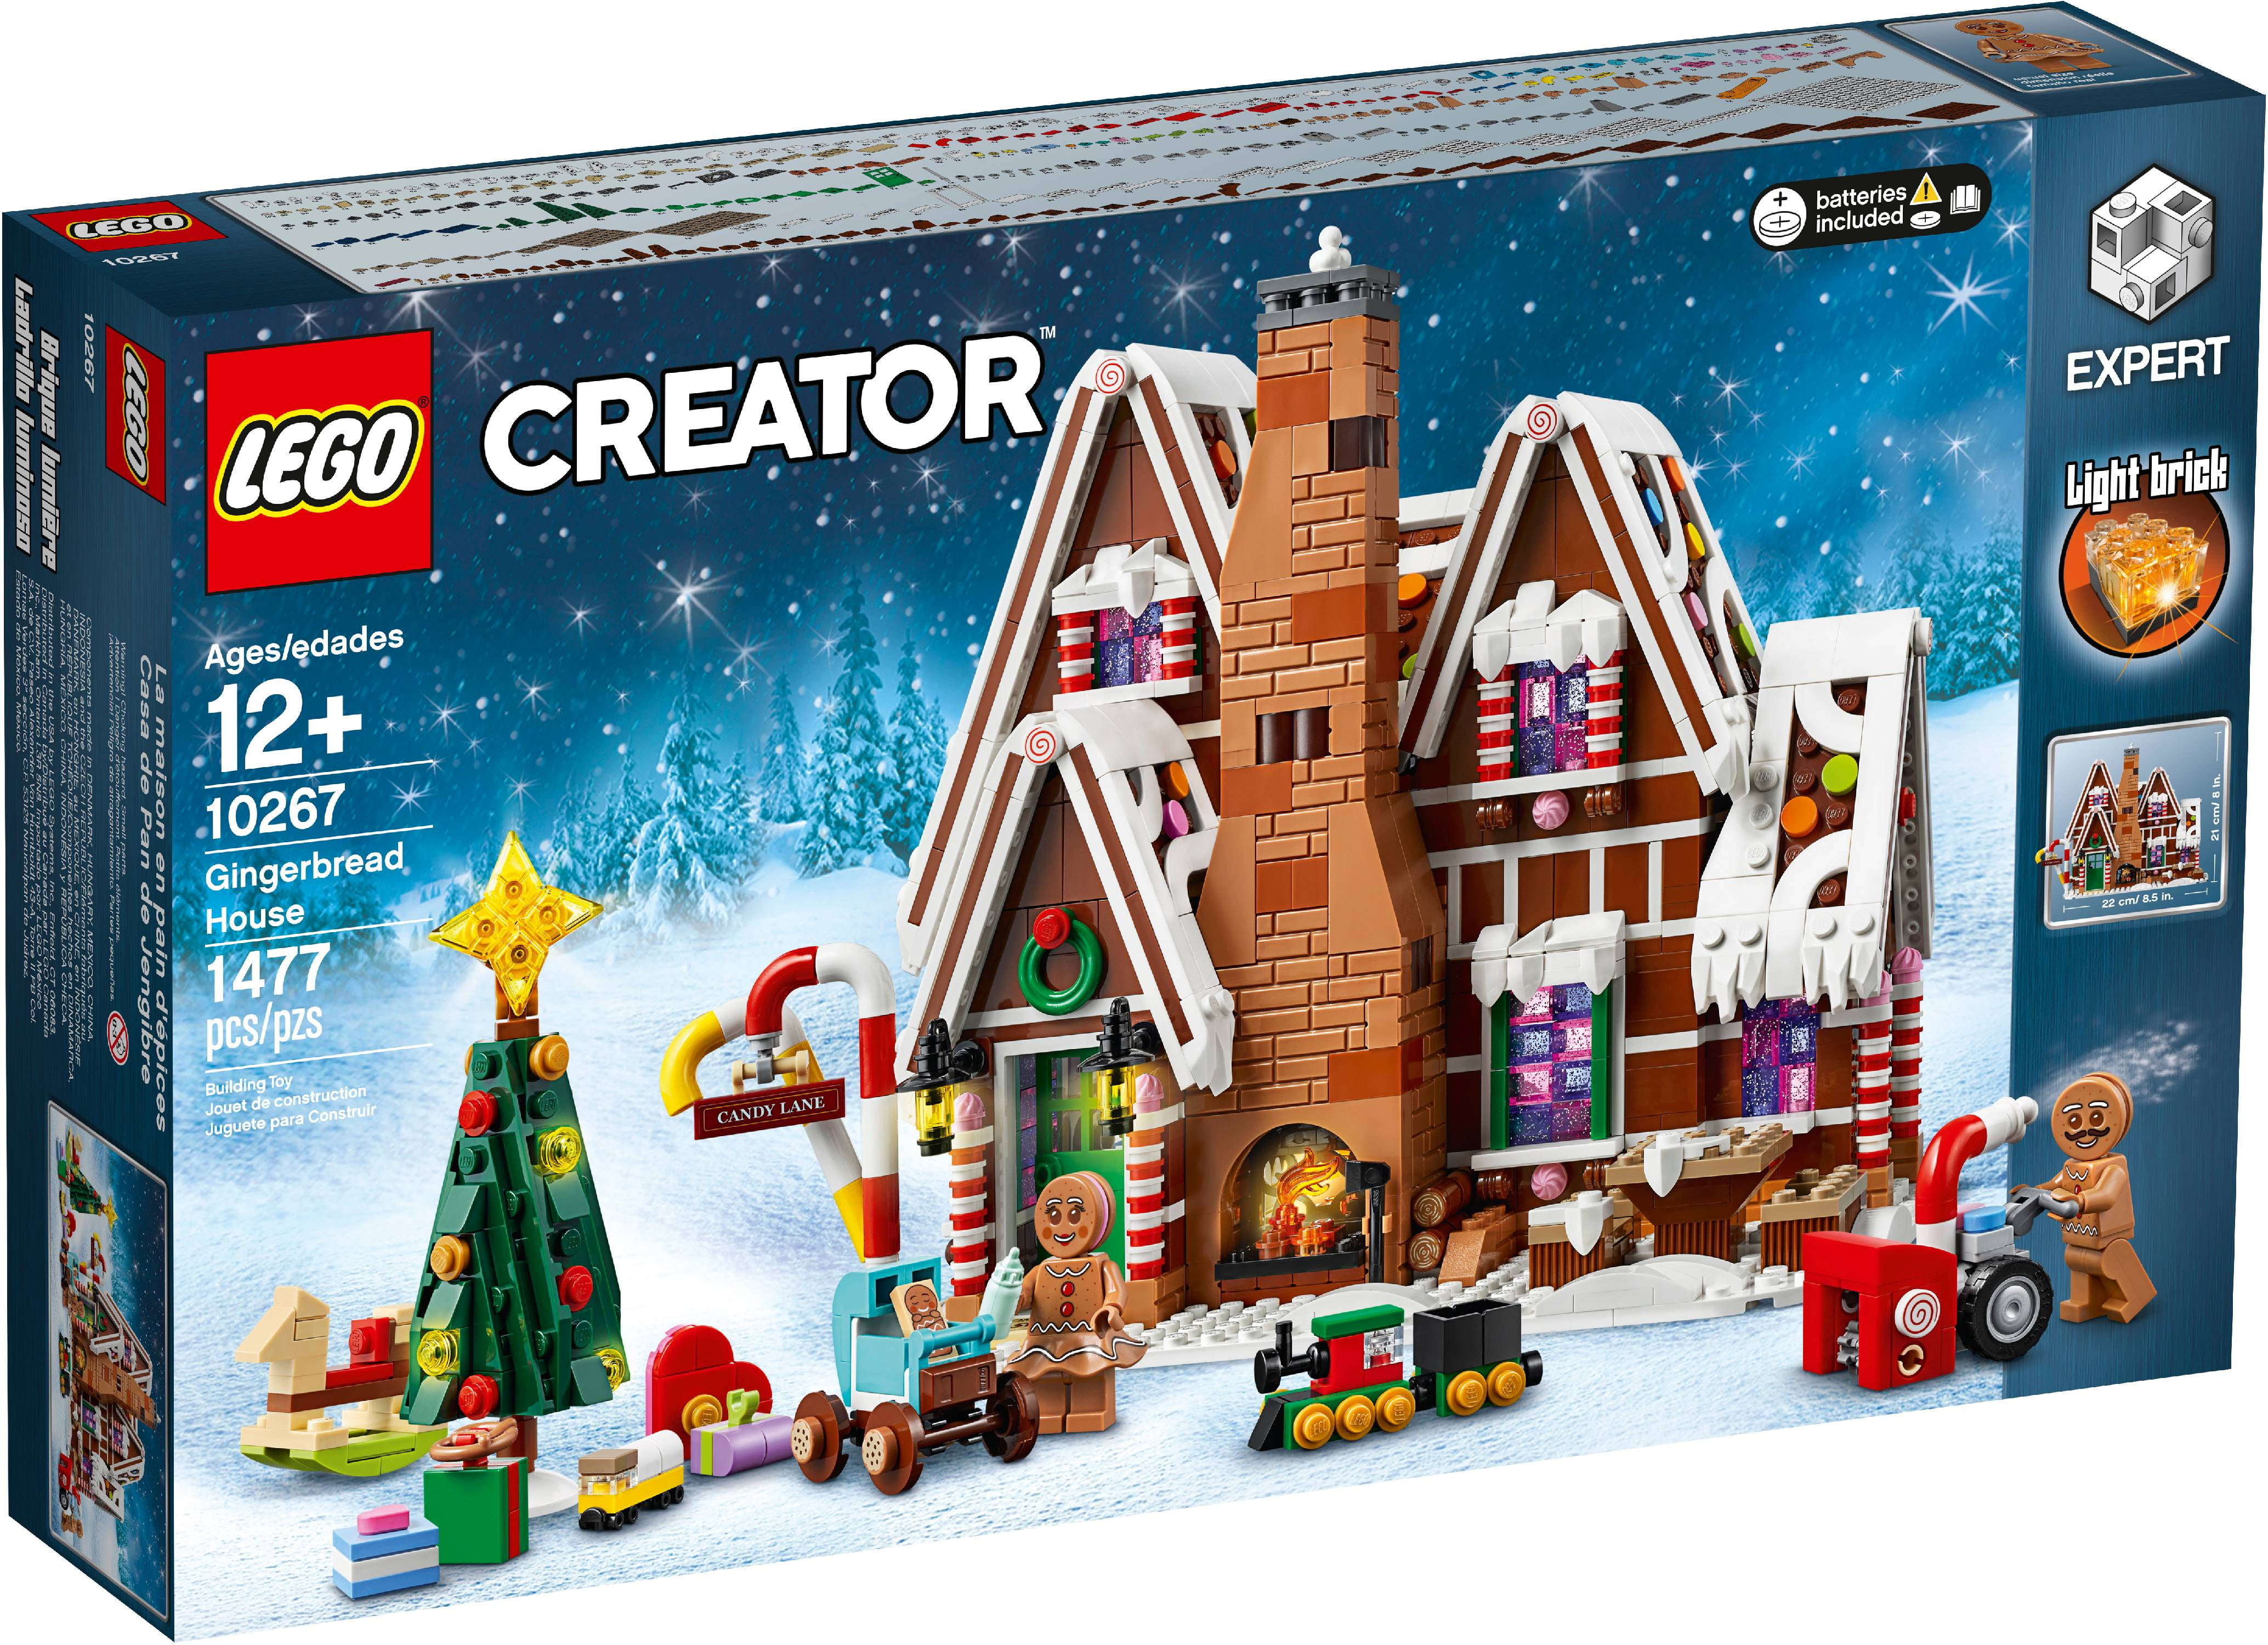 LEGO Creator Expert Gingerbread House Building Kit (1477 Piece) - Walmart.com